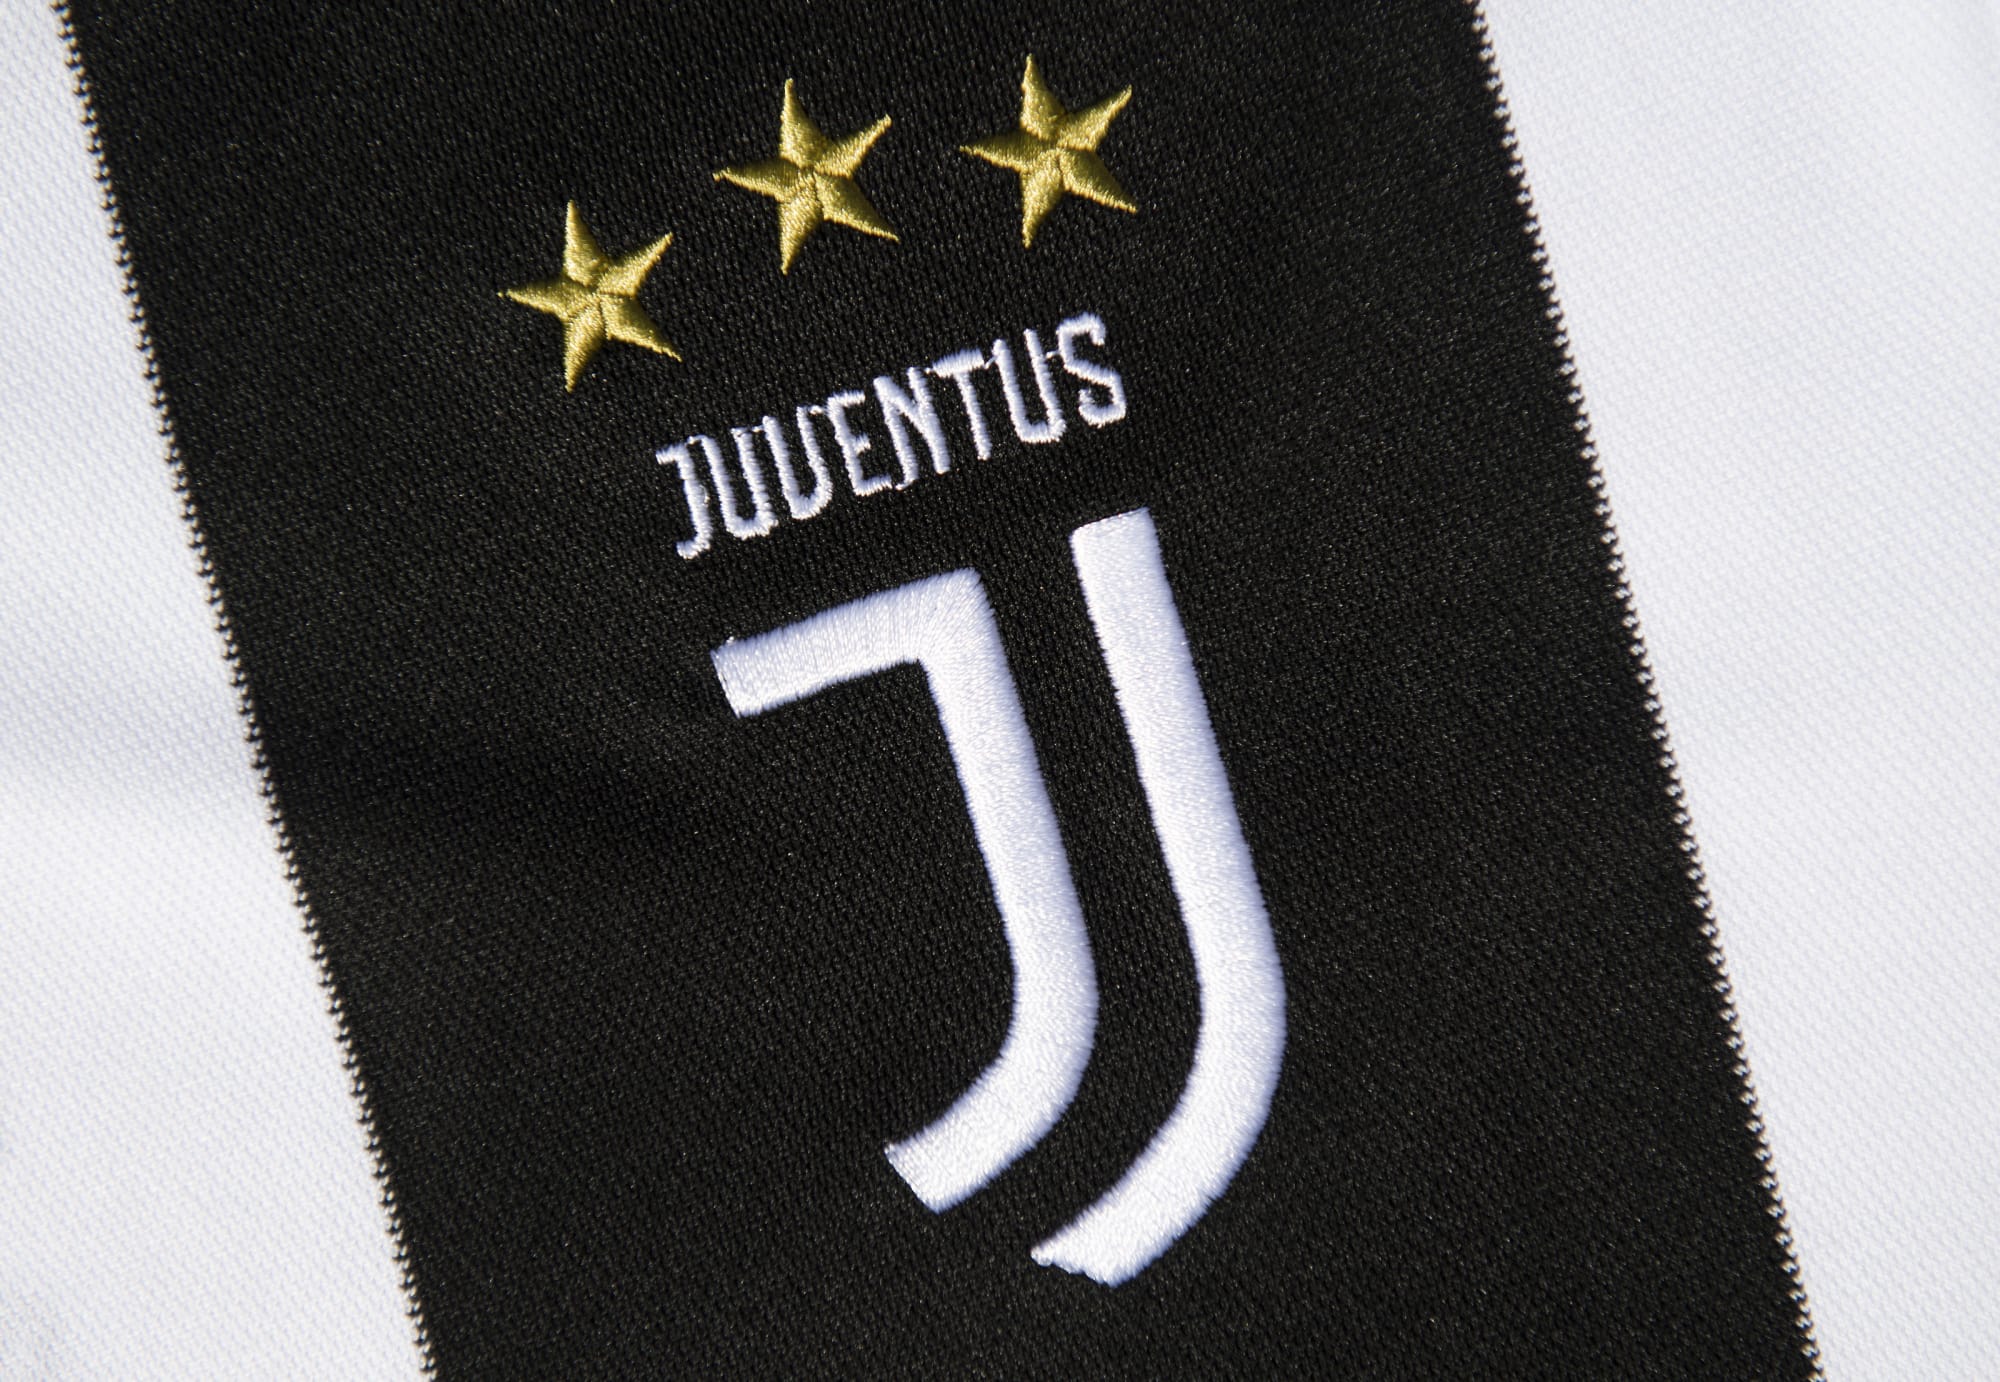 Juventus 'leave ECA' in the wake of Super League reveal - Flipboard